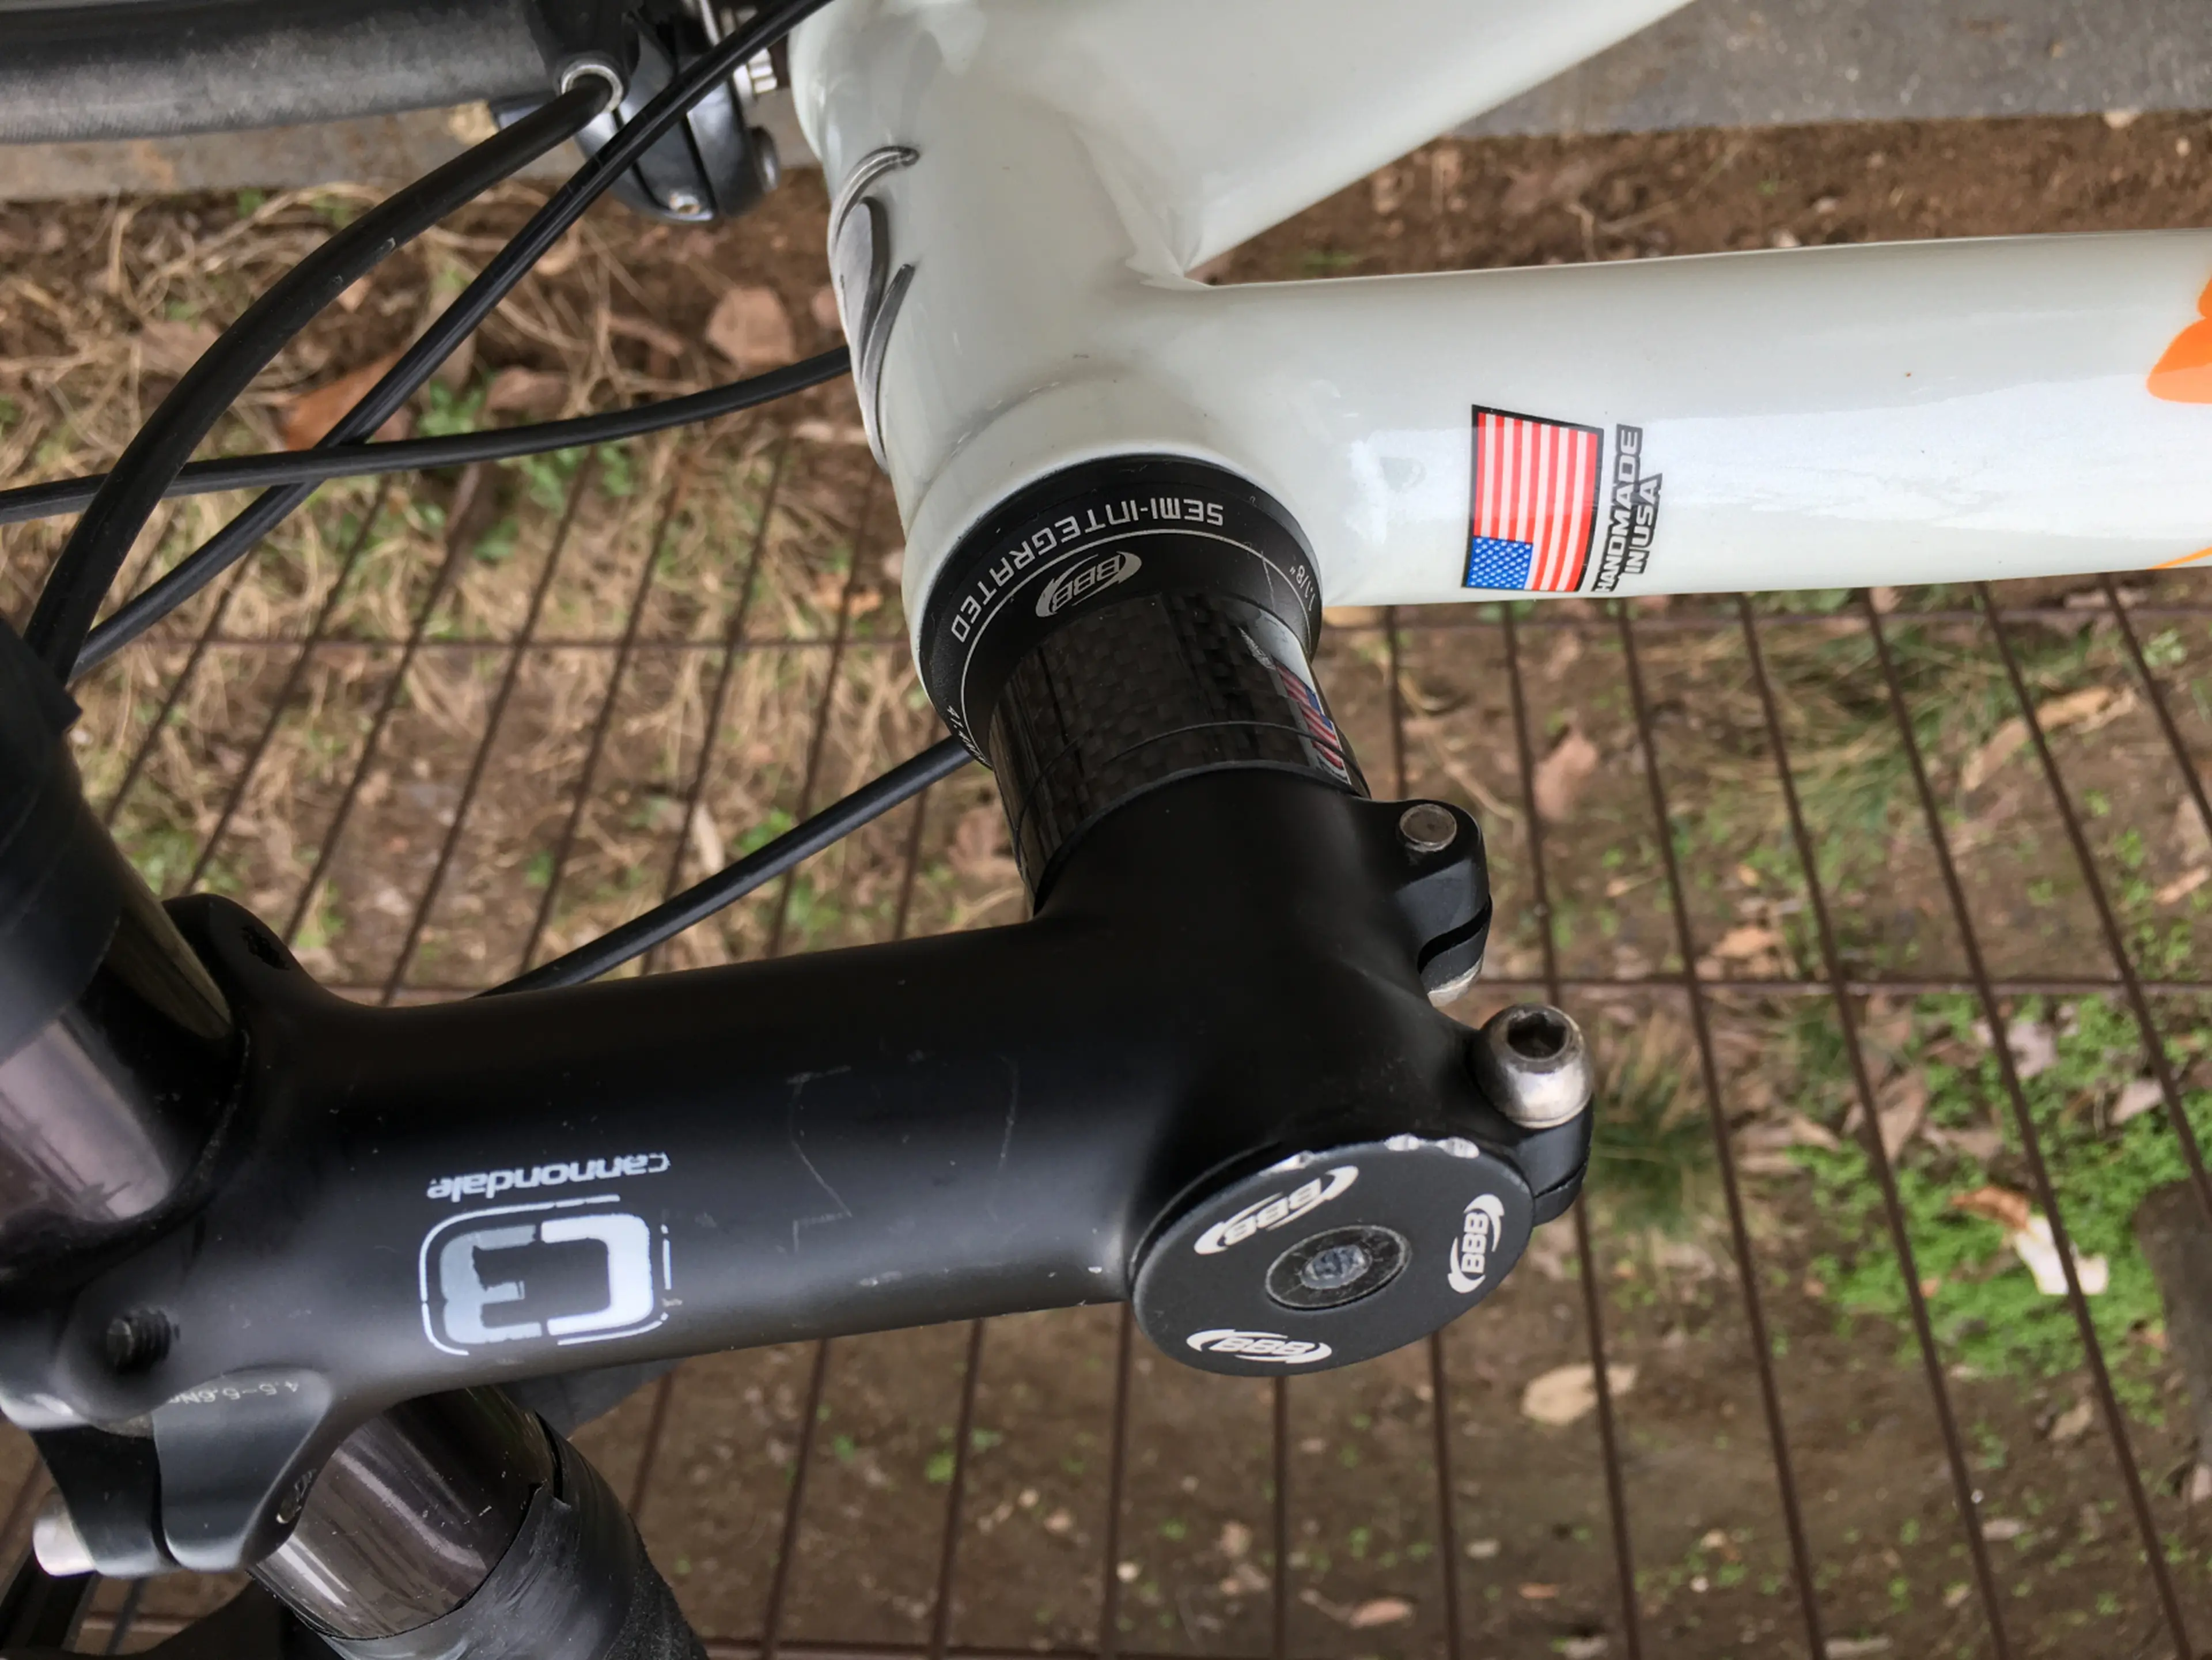 3. Bicicleta America cannondale carbon